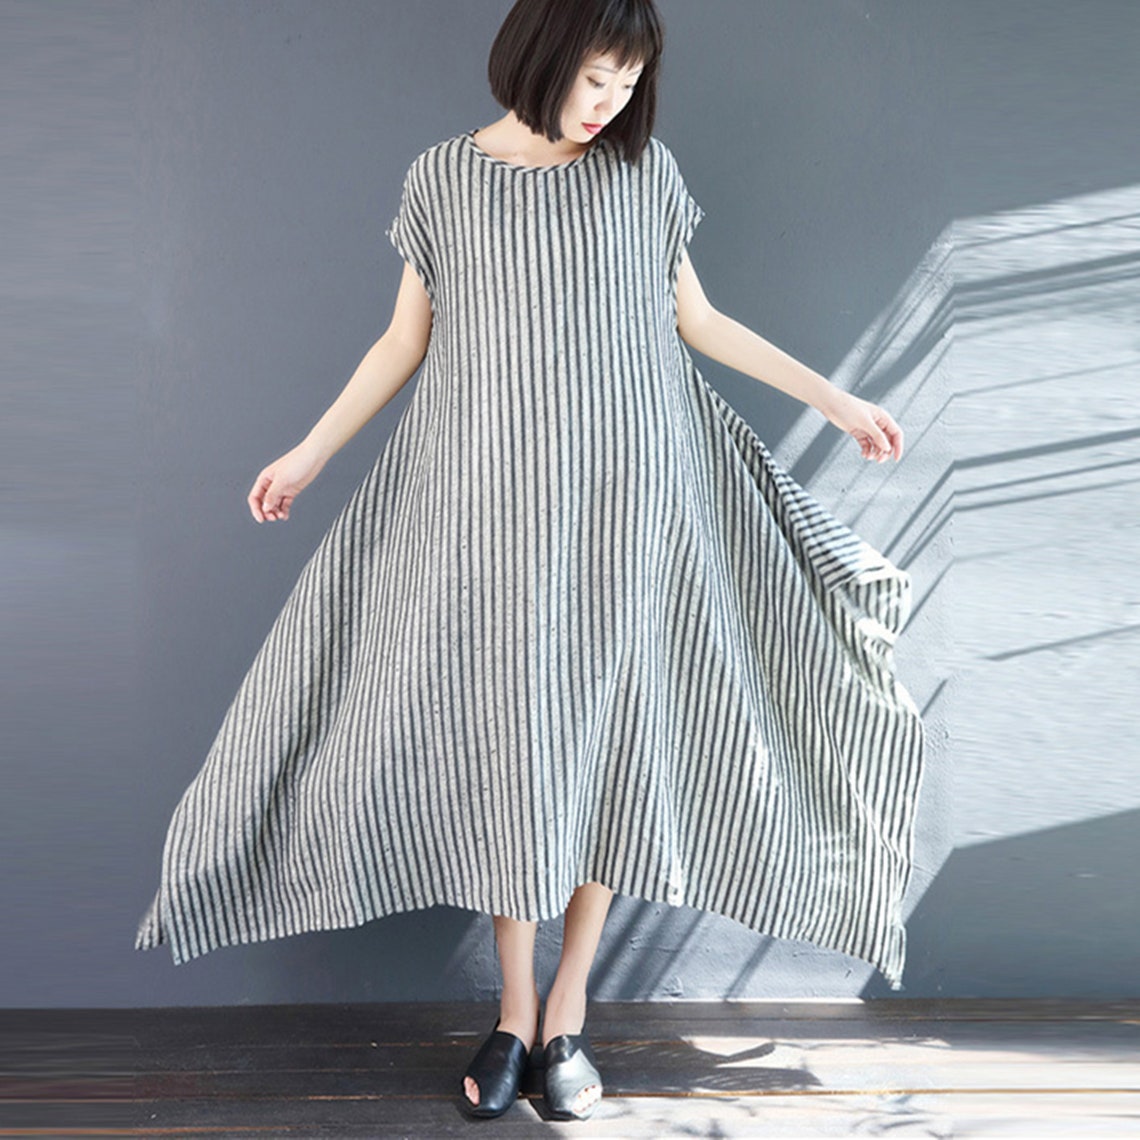 Striped Linen Cotton DressShort Sleeve Cotton DressSummer | Etsy